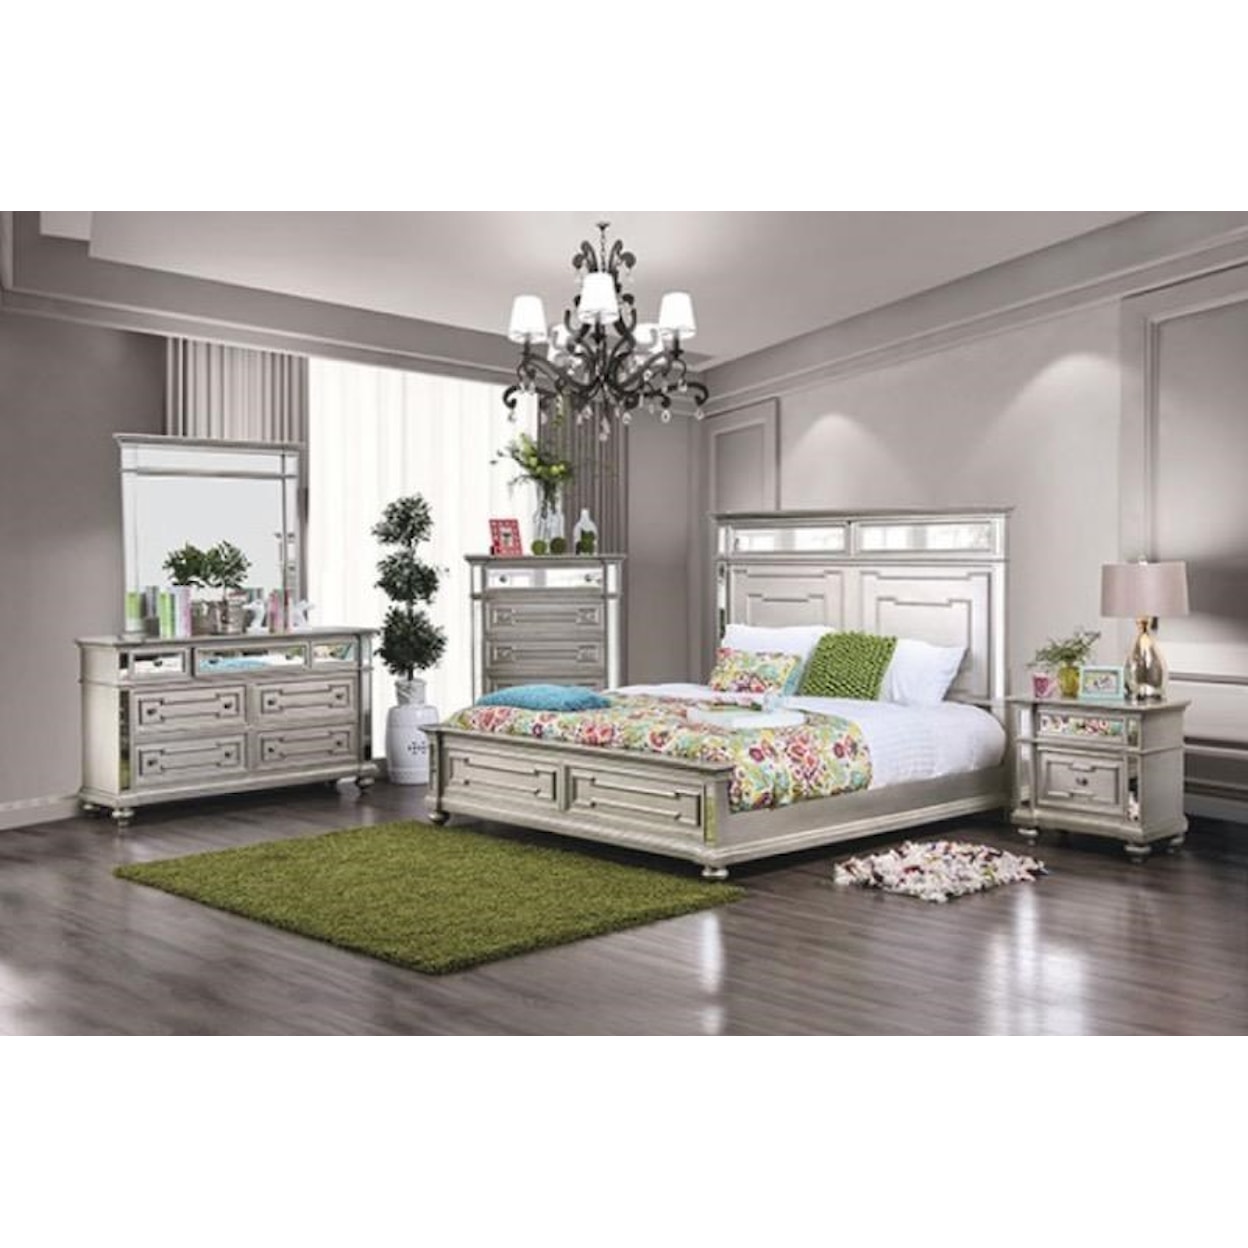 Furniture of America Salamanca Glam Queen Bed